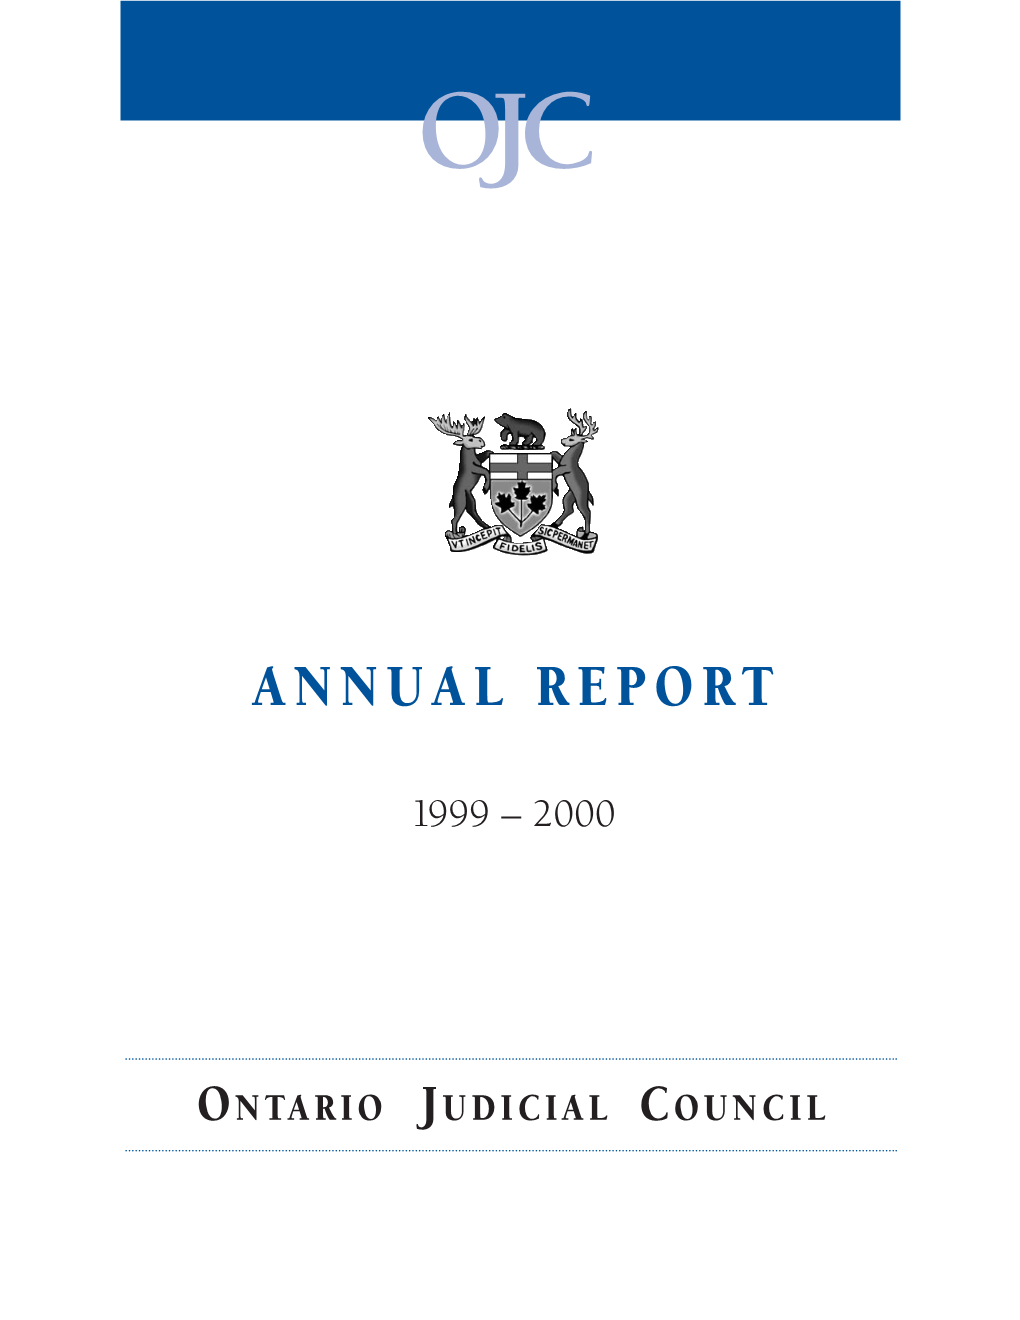 Annual Report 1999-2000